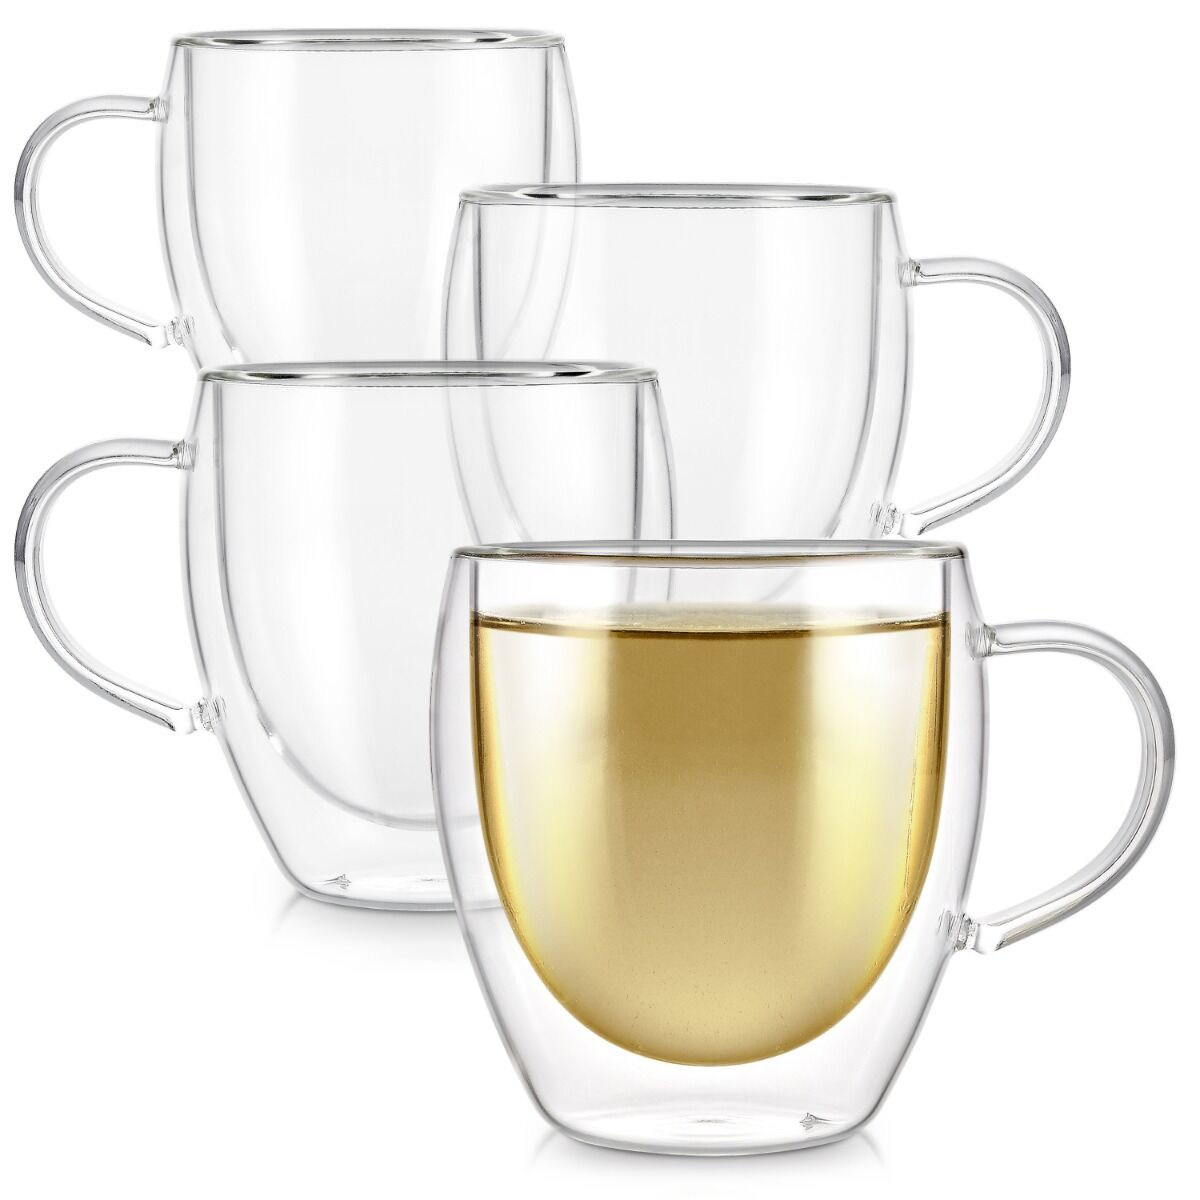 Teabloom Double Wall Teacup brosilicate glass tea accessories